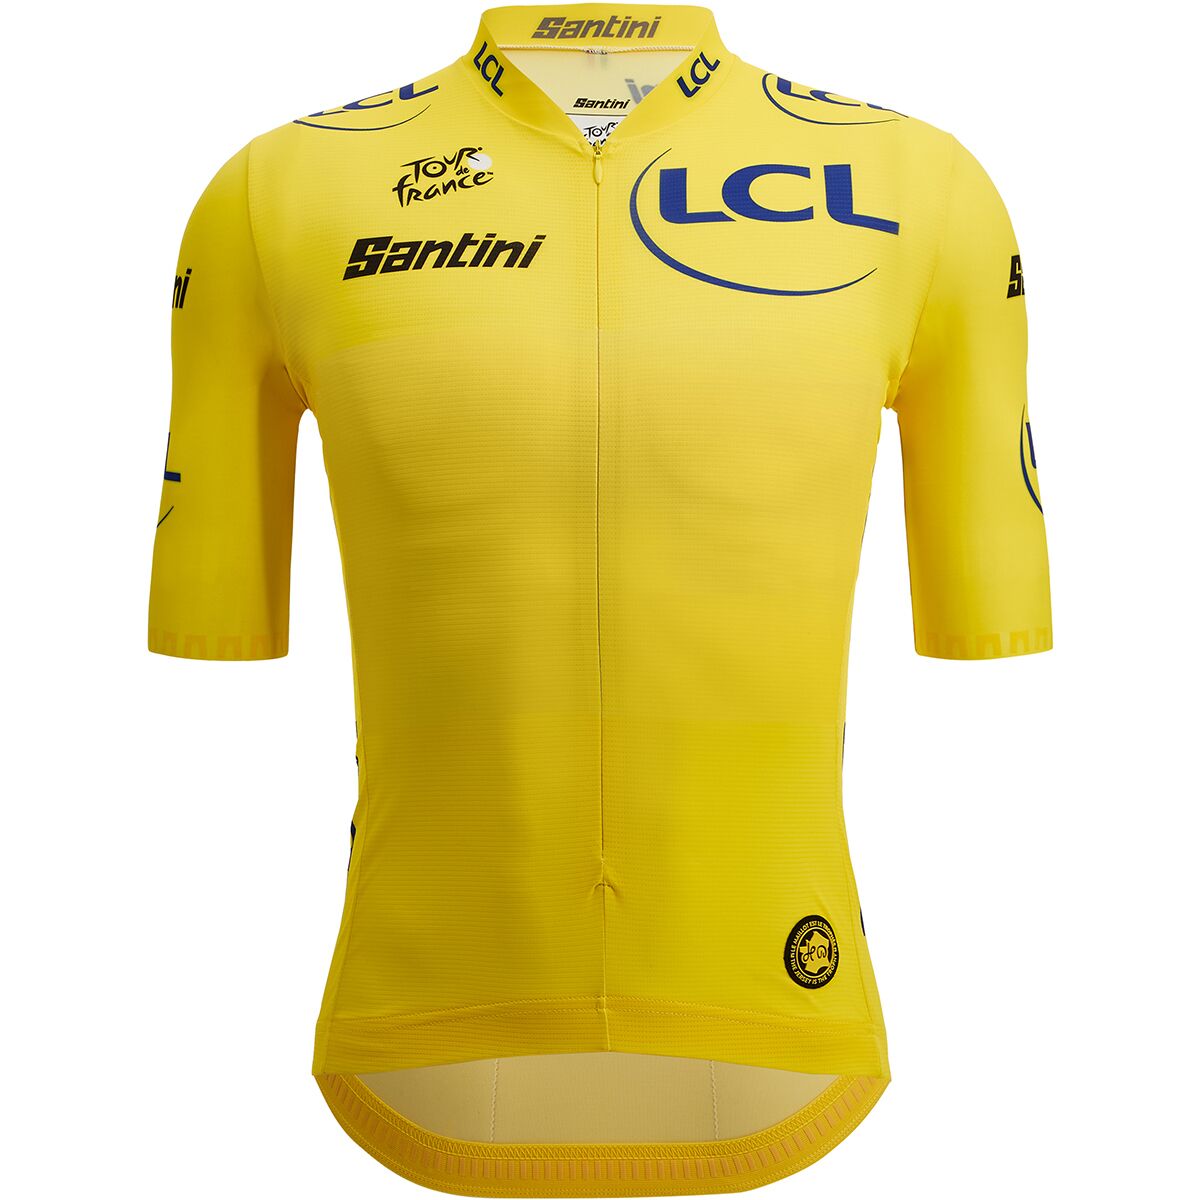 Santini Tour de France Official Team Overall Leader Jersey - Men's